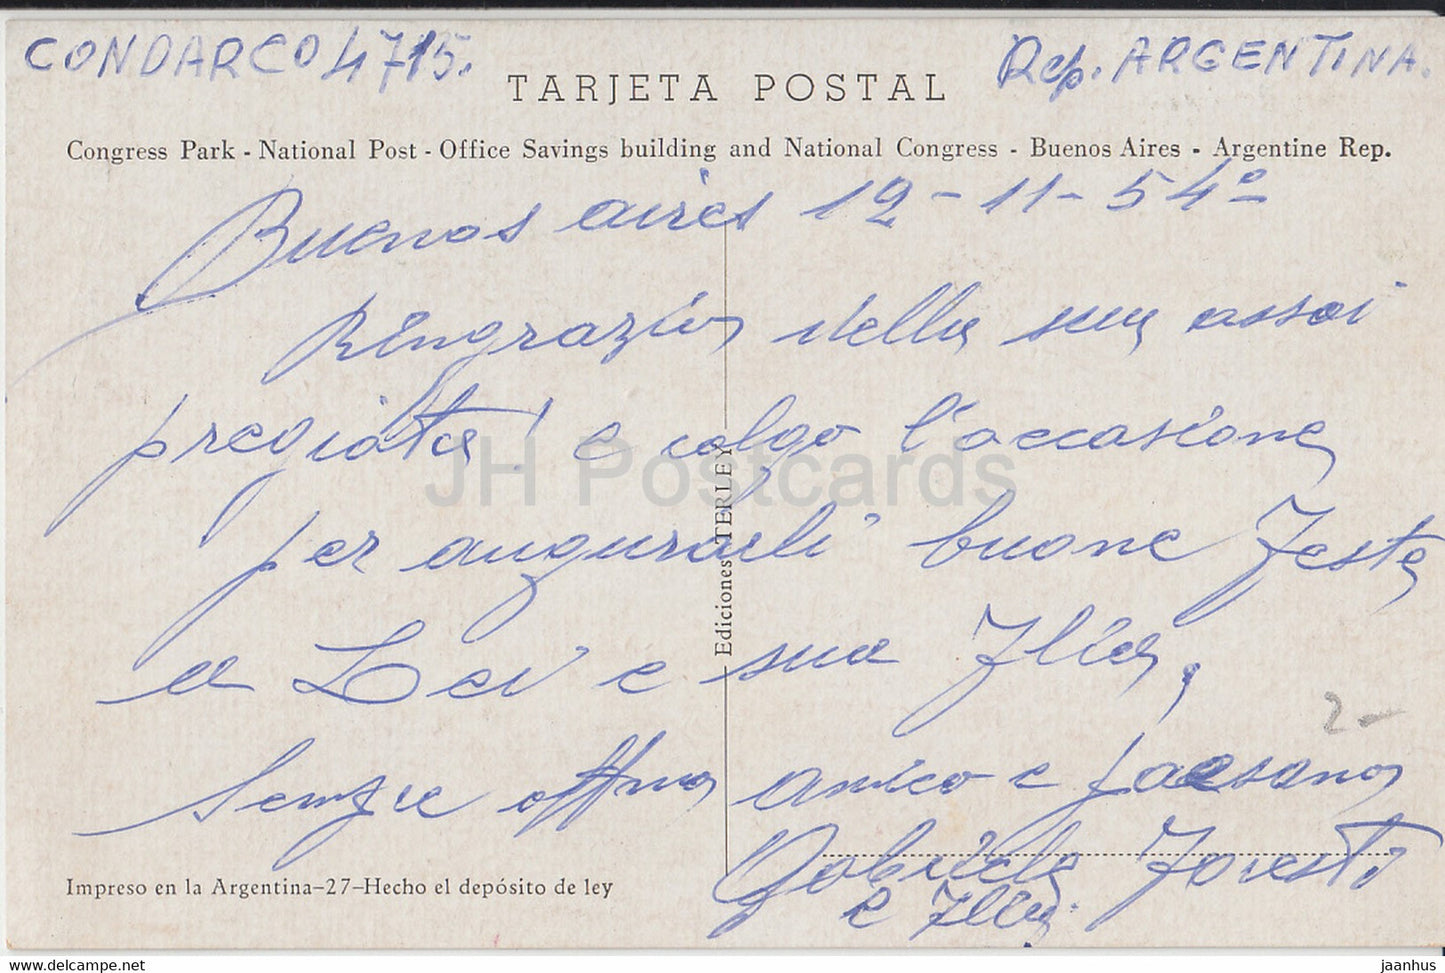 Buenos Aires - Plaza del Congreso - 241 - old postcard - 1954 - Argentina - used